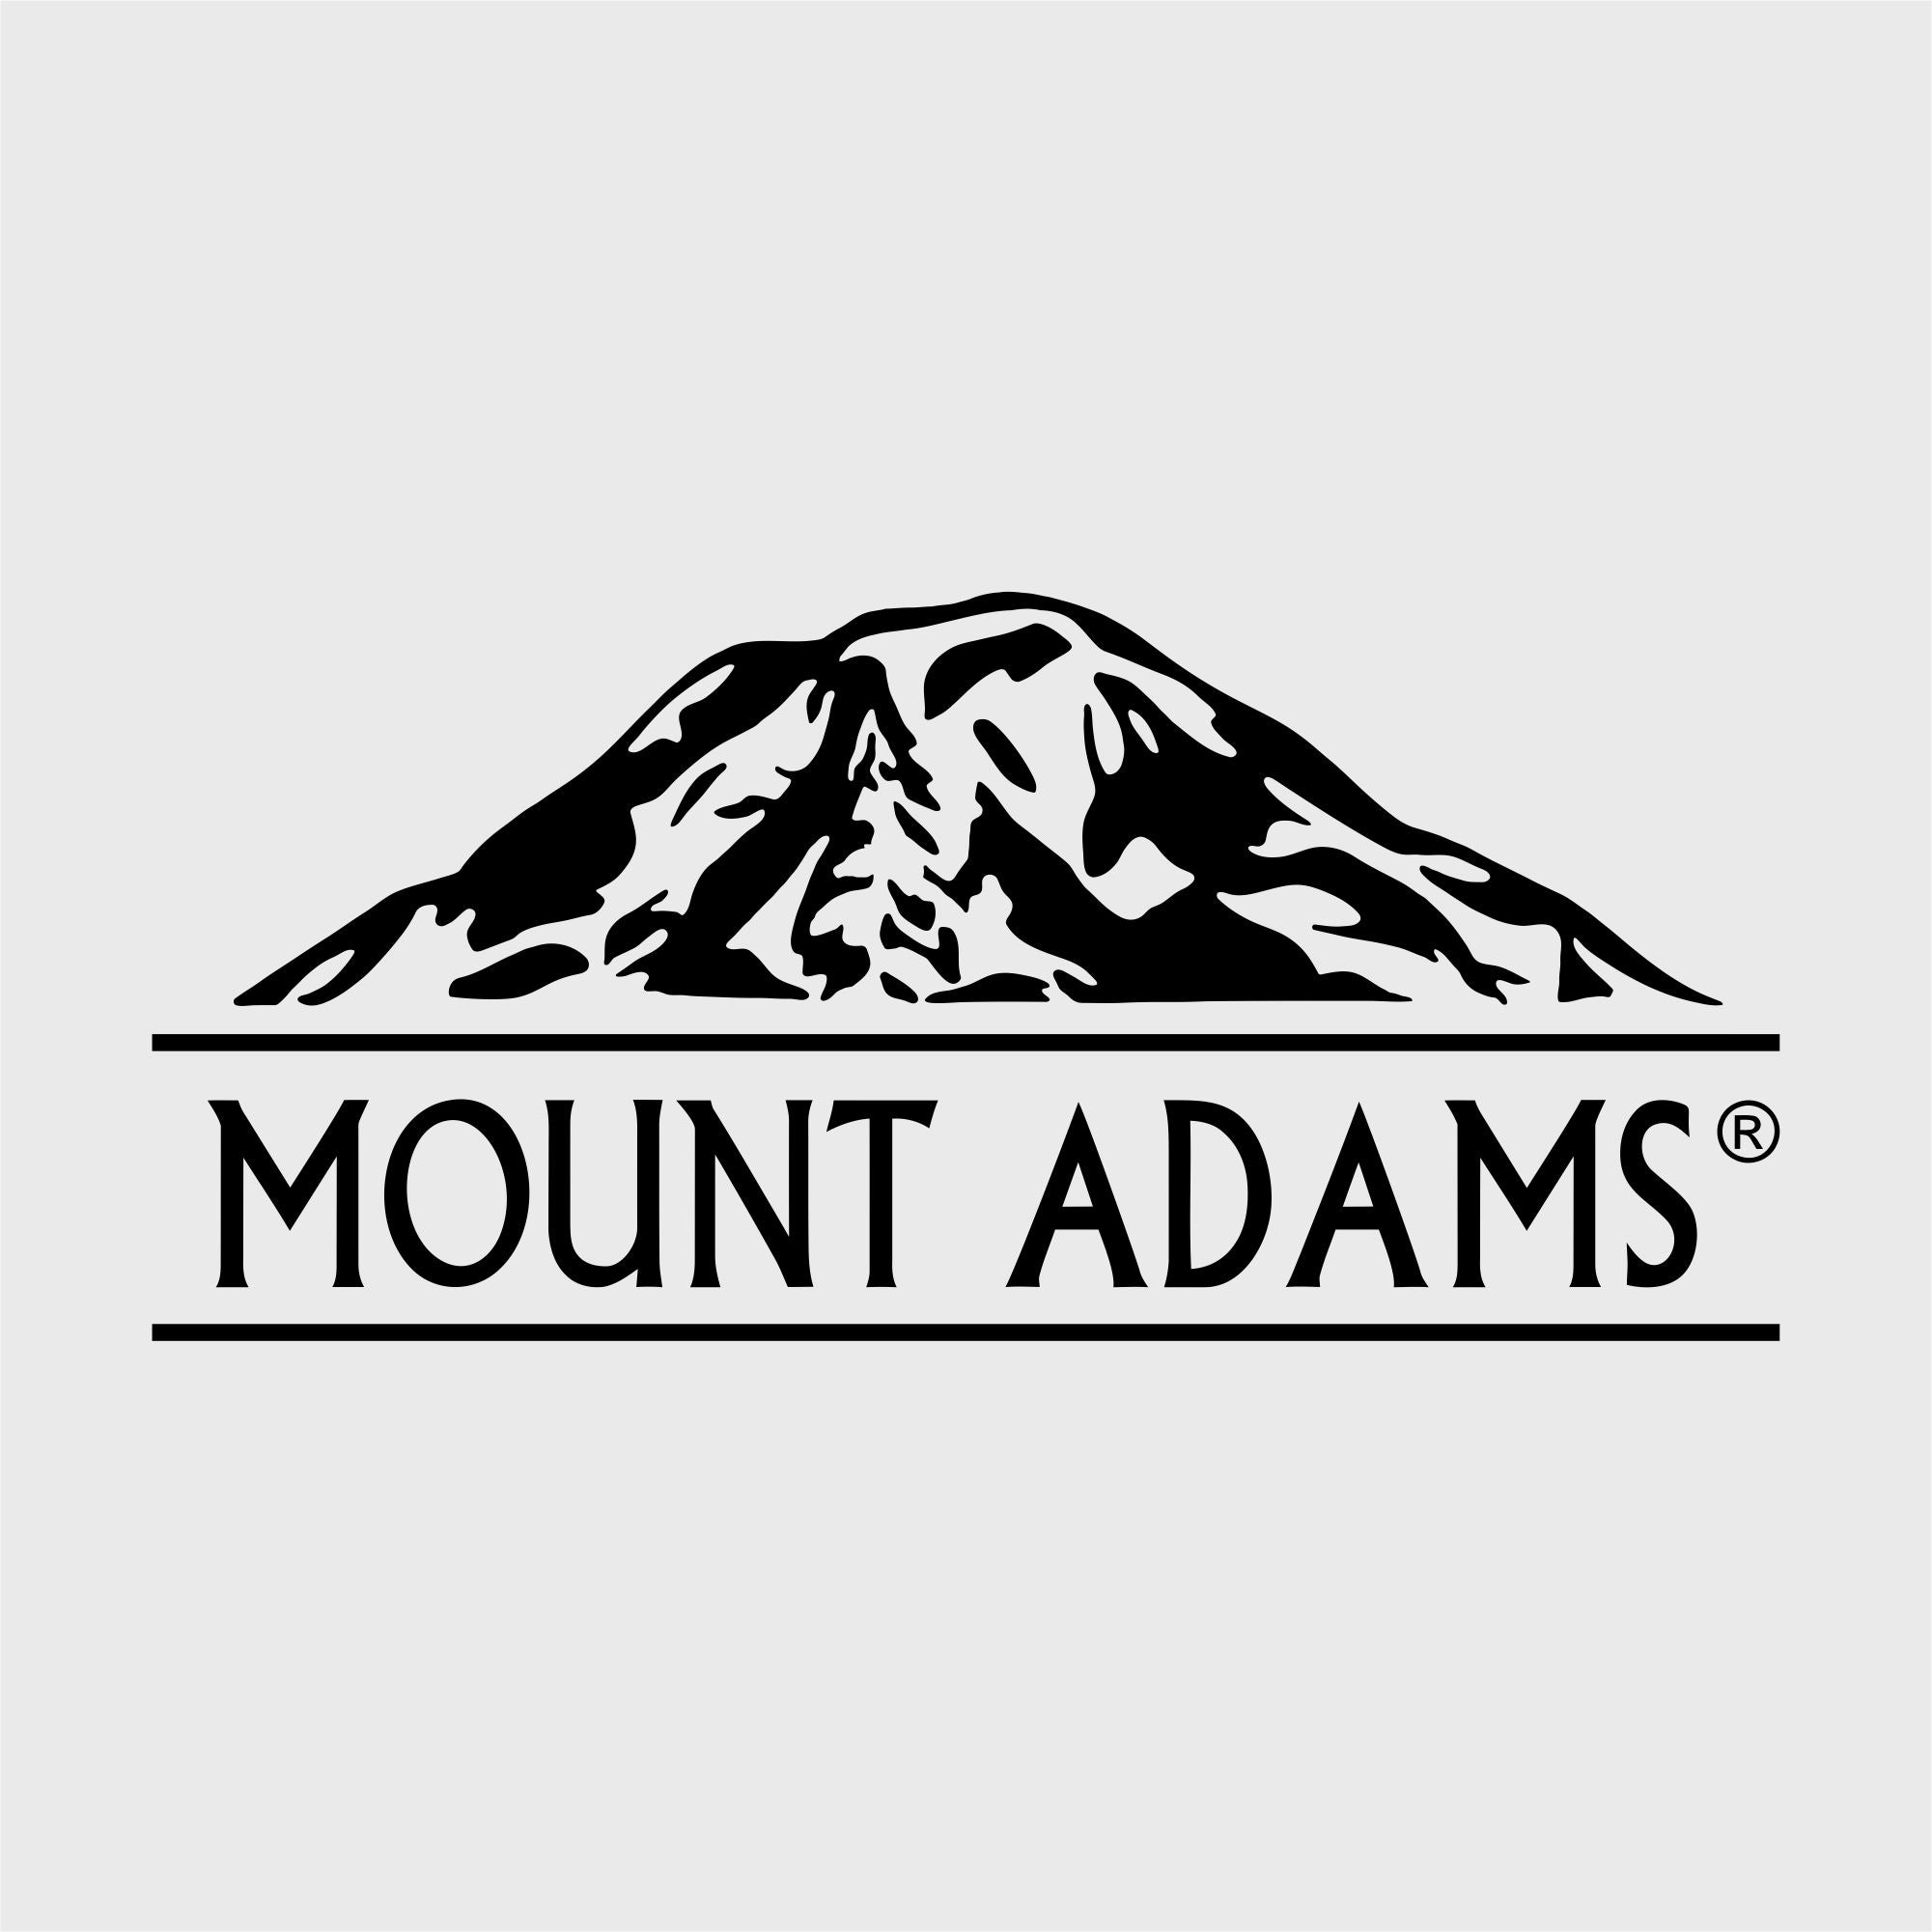 Mount Adams Yoga Knee Pad -24 x 12 x 15mm